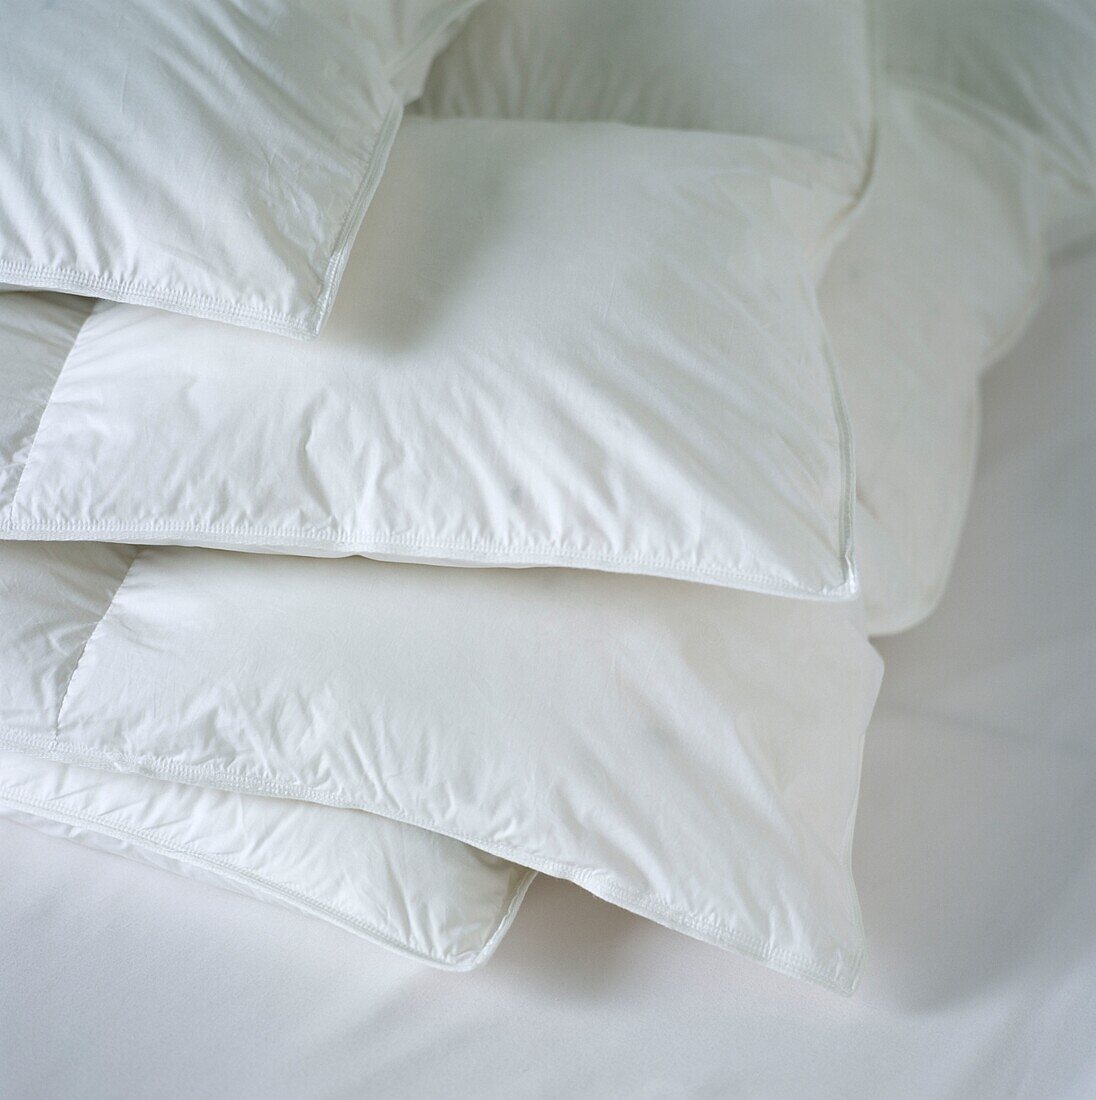 Pile of pillows